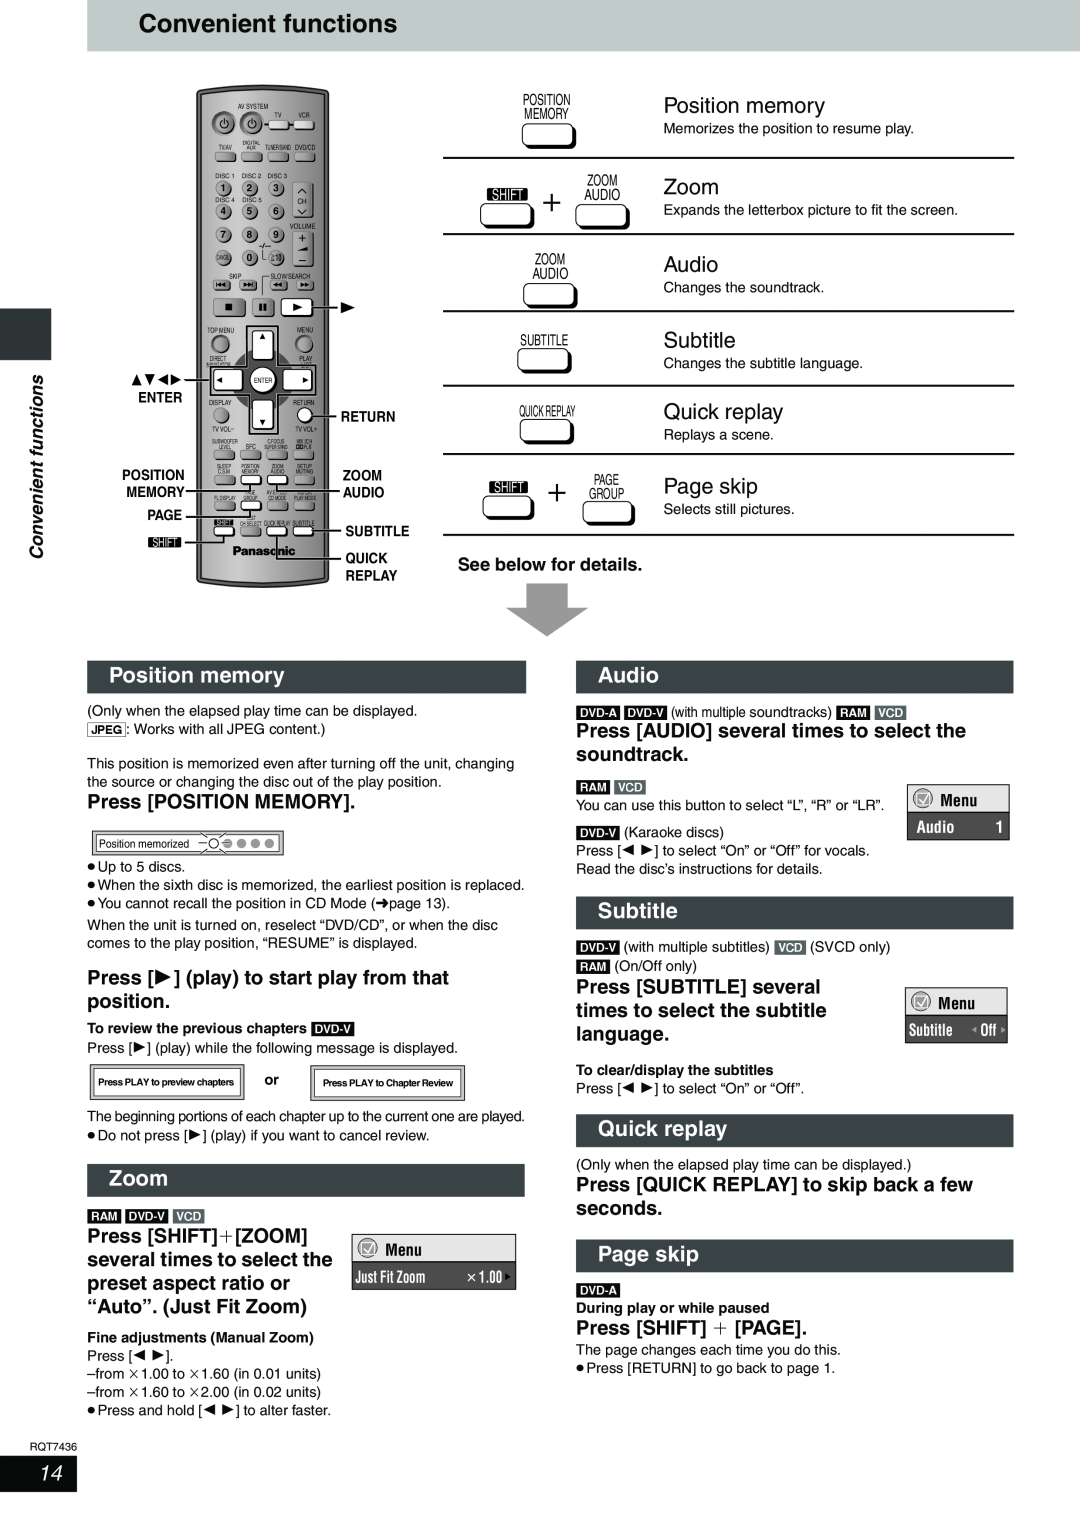 Panasonic SC-HT928 Convenient functions, Position memory, Zoom, Audio, Subtitle, Quick replay, Page skip, Menu, 1.00 